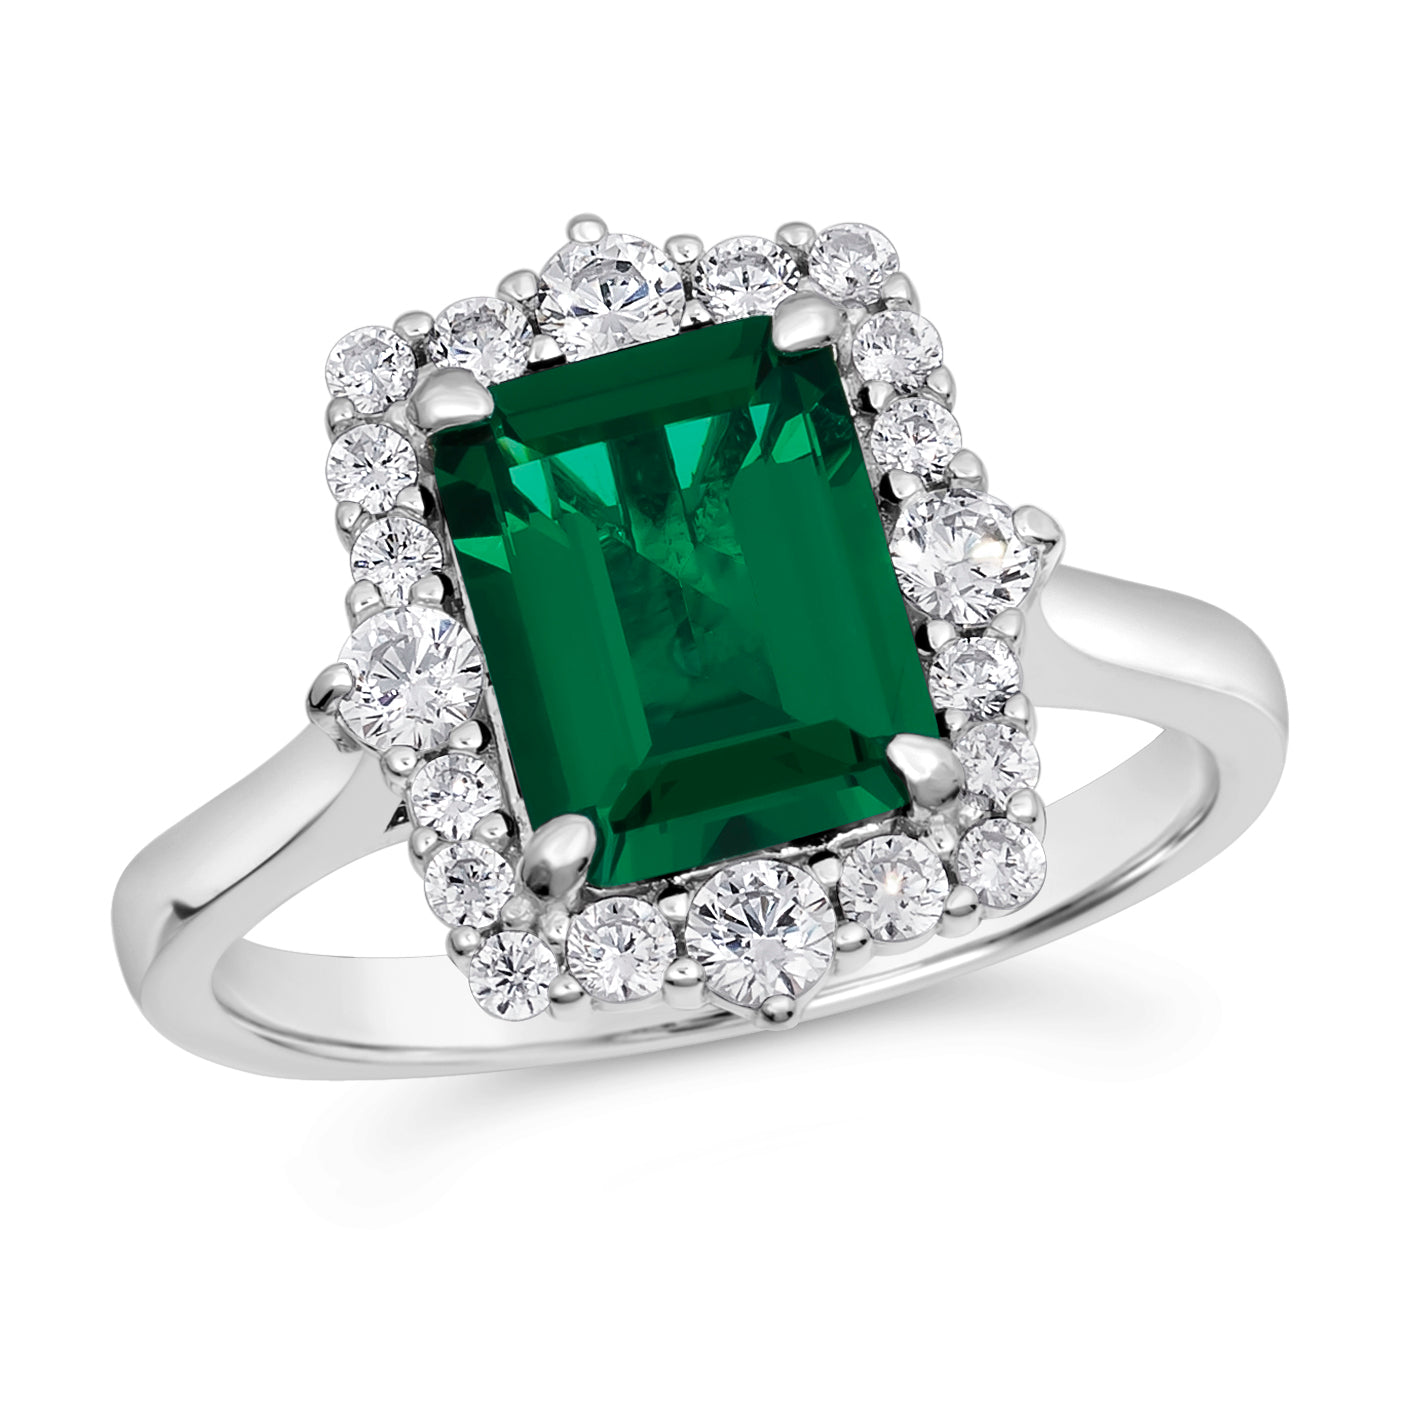 Oraia 3 Carat Emerald Cut Ring